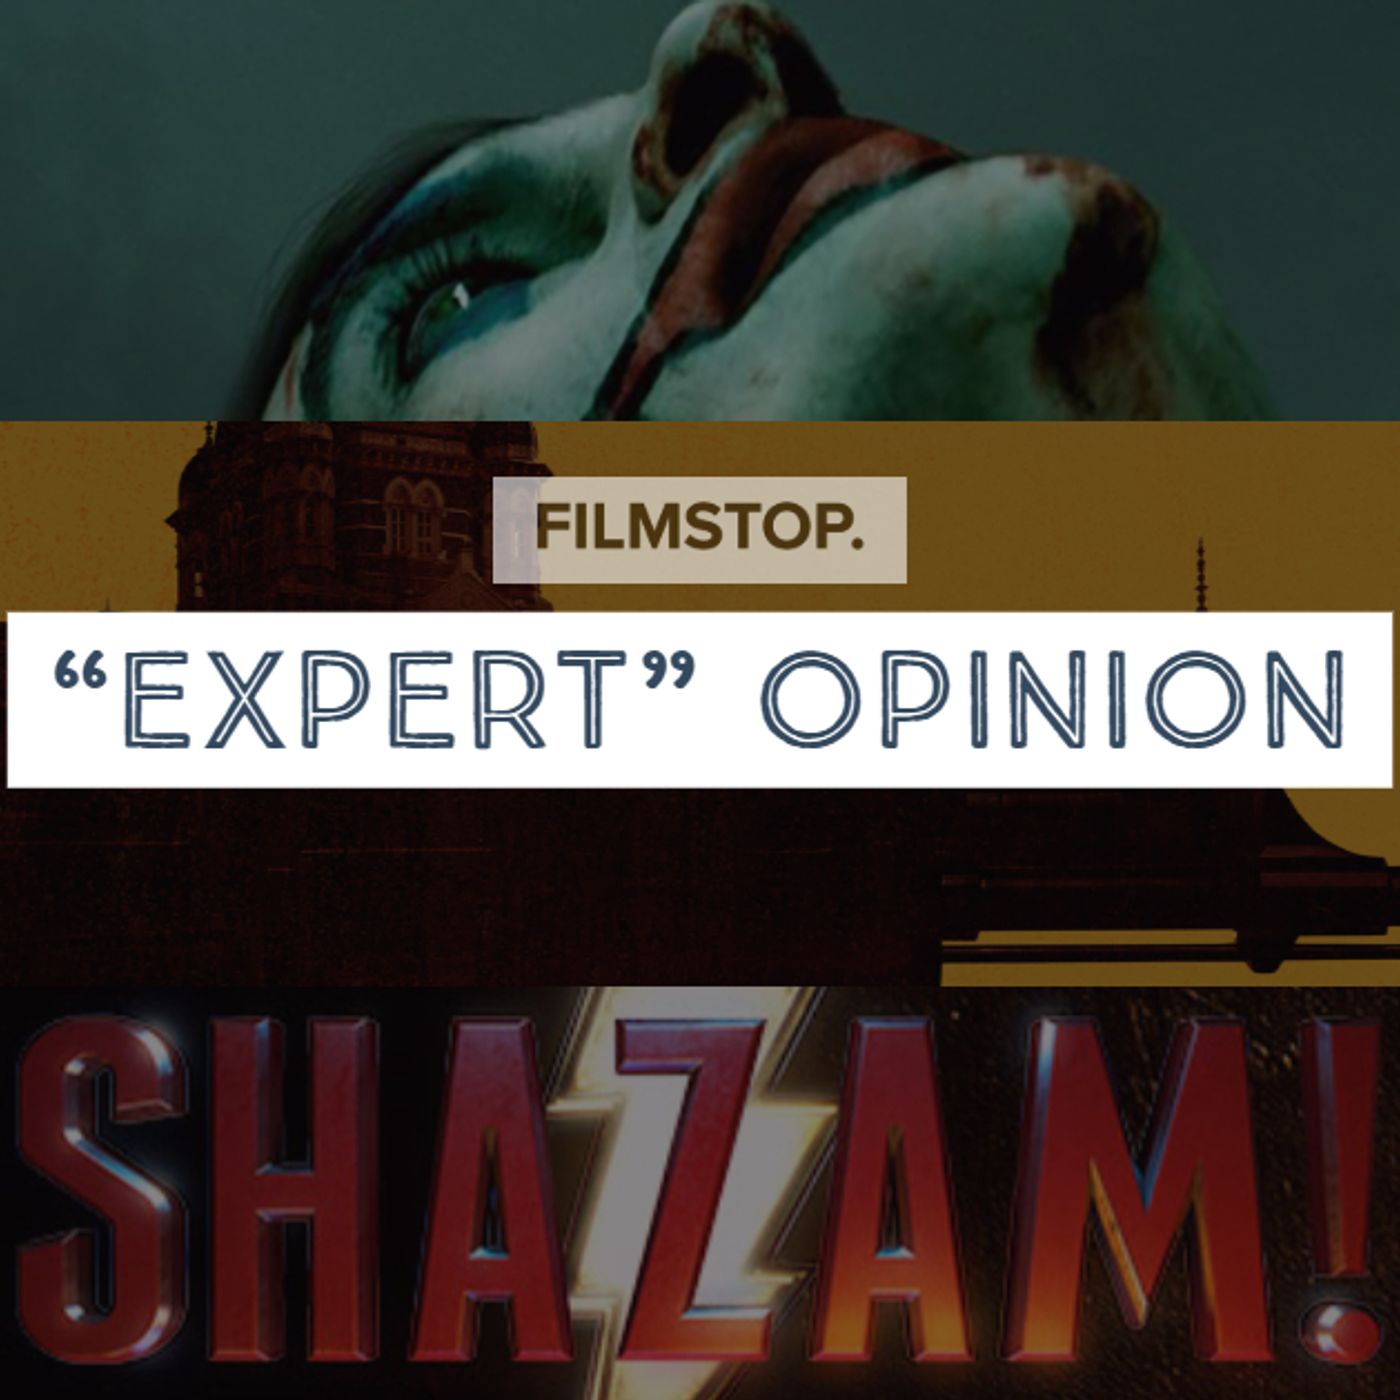 EP11 ”Expert” Opinion - Joker, Hotel Mumbai and Shazam!